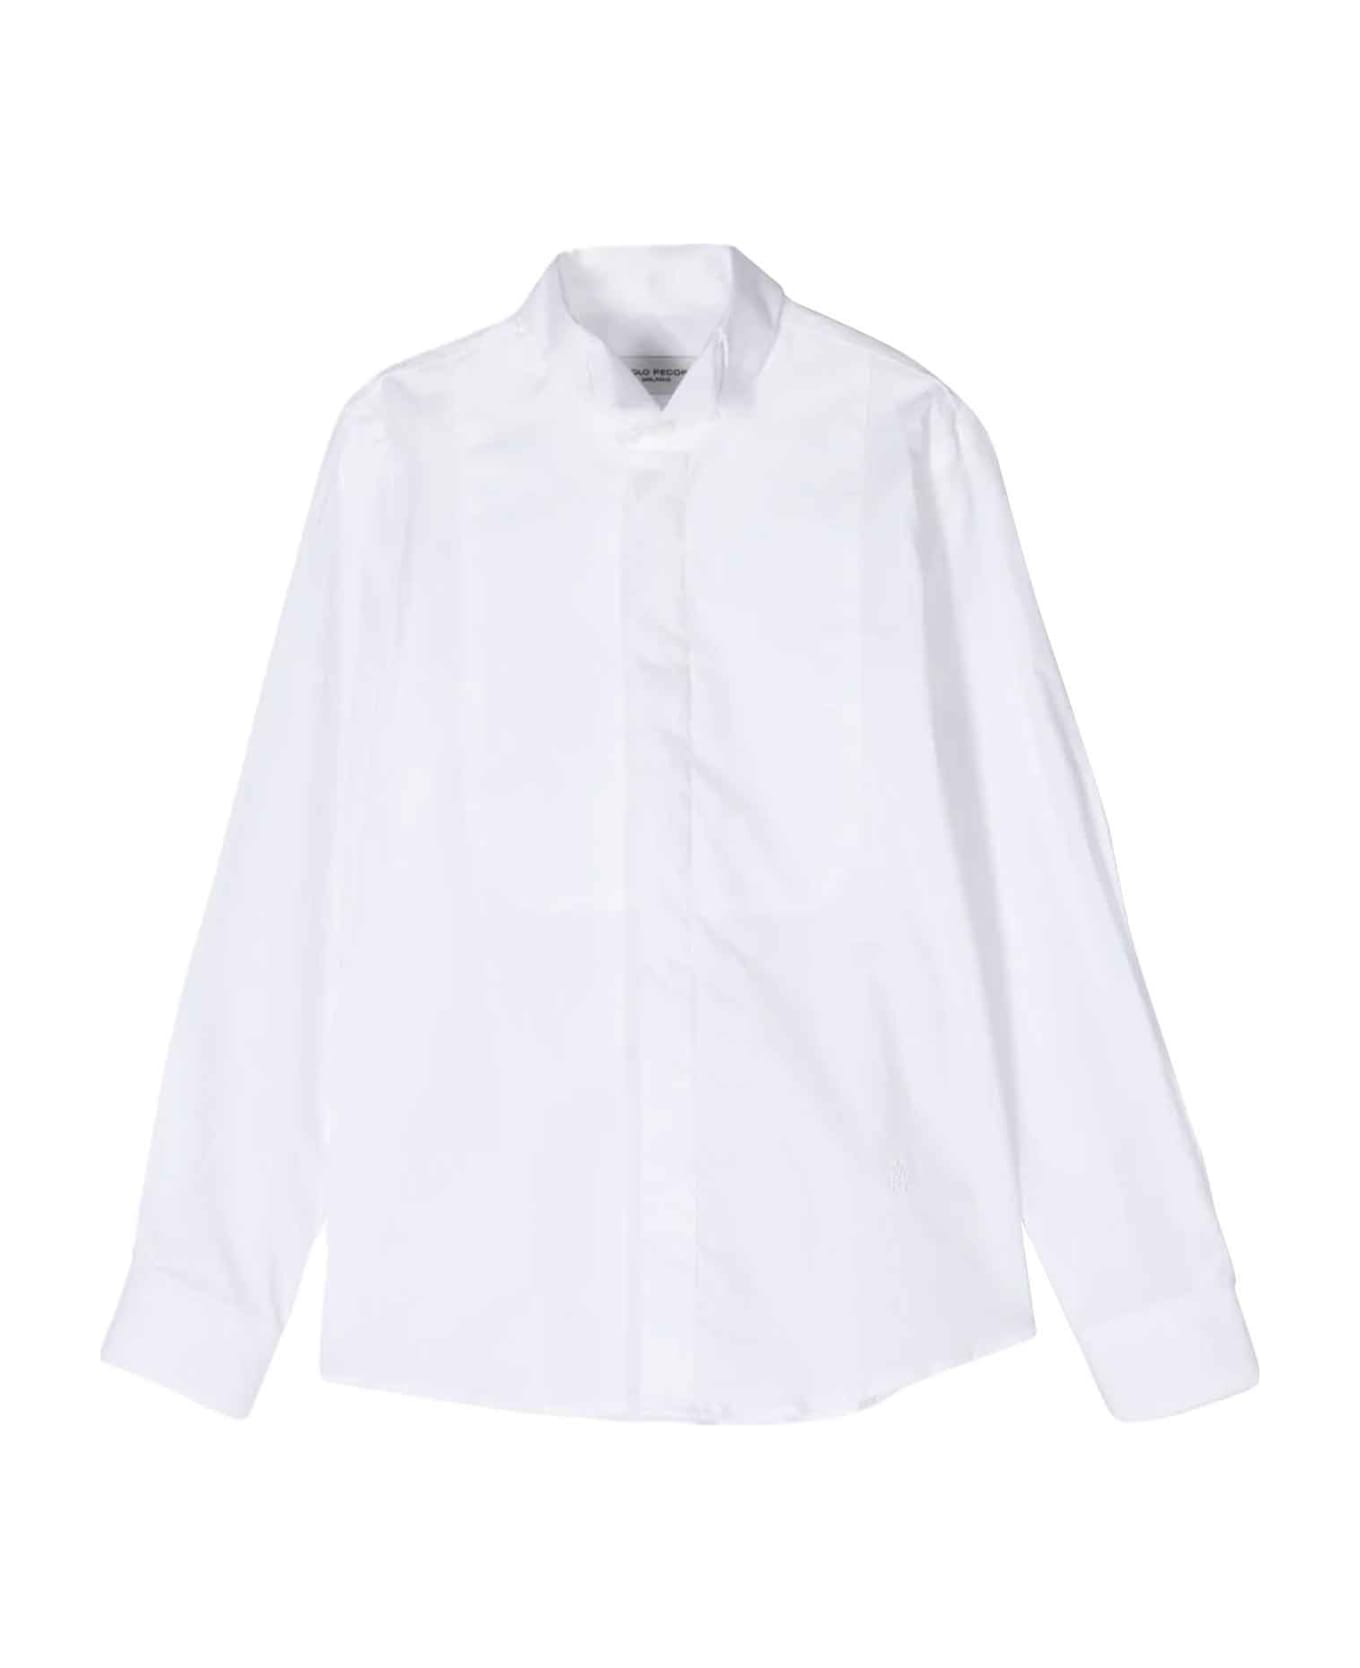 Paolo Pecora White Shirt Boy - Bianco